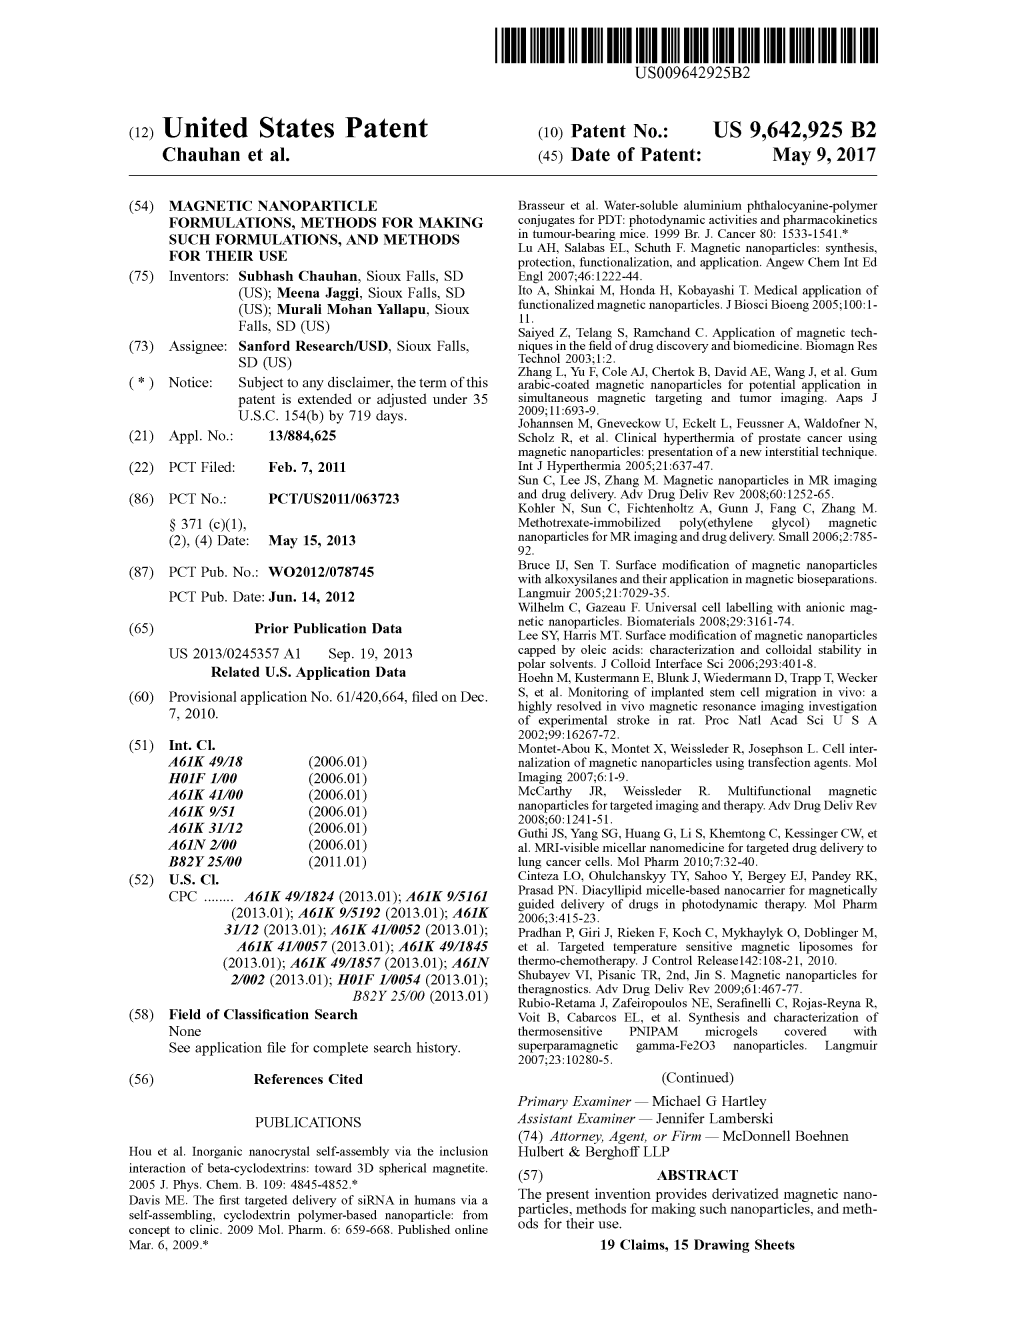 (12) United States Patent (10) Patent No.: US 9,642.925 B2 Chauhan Et Al